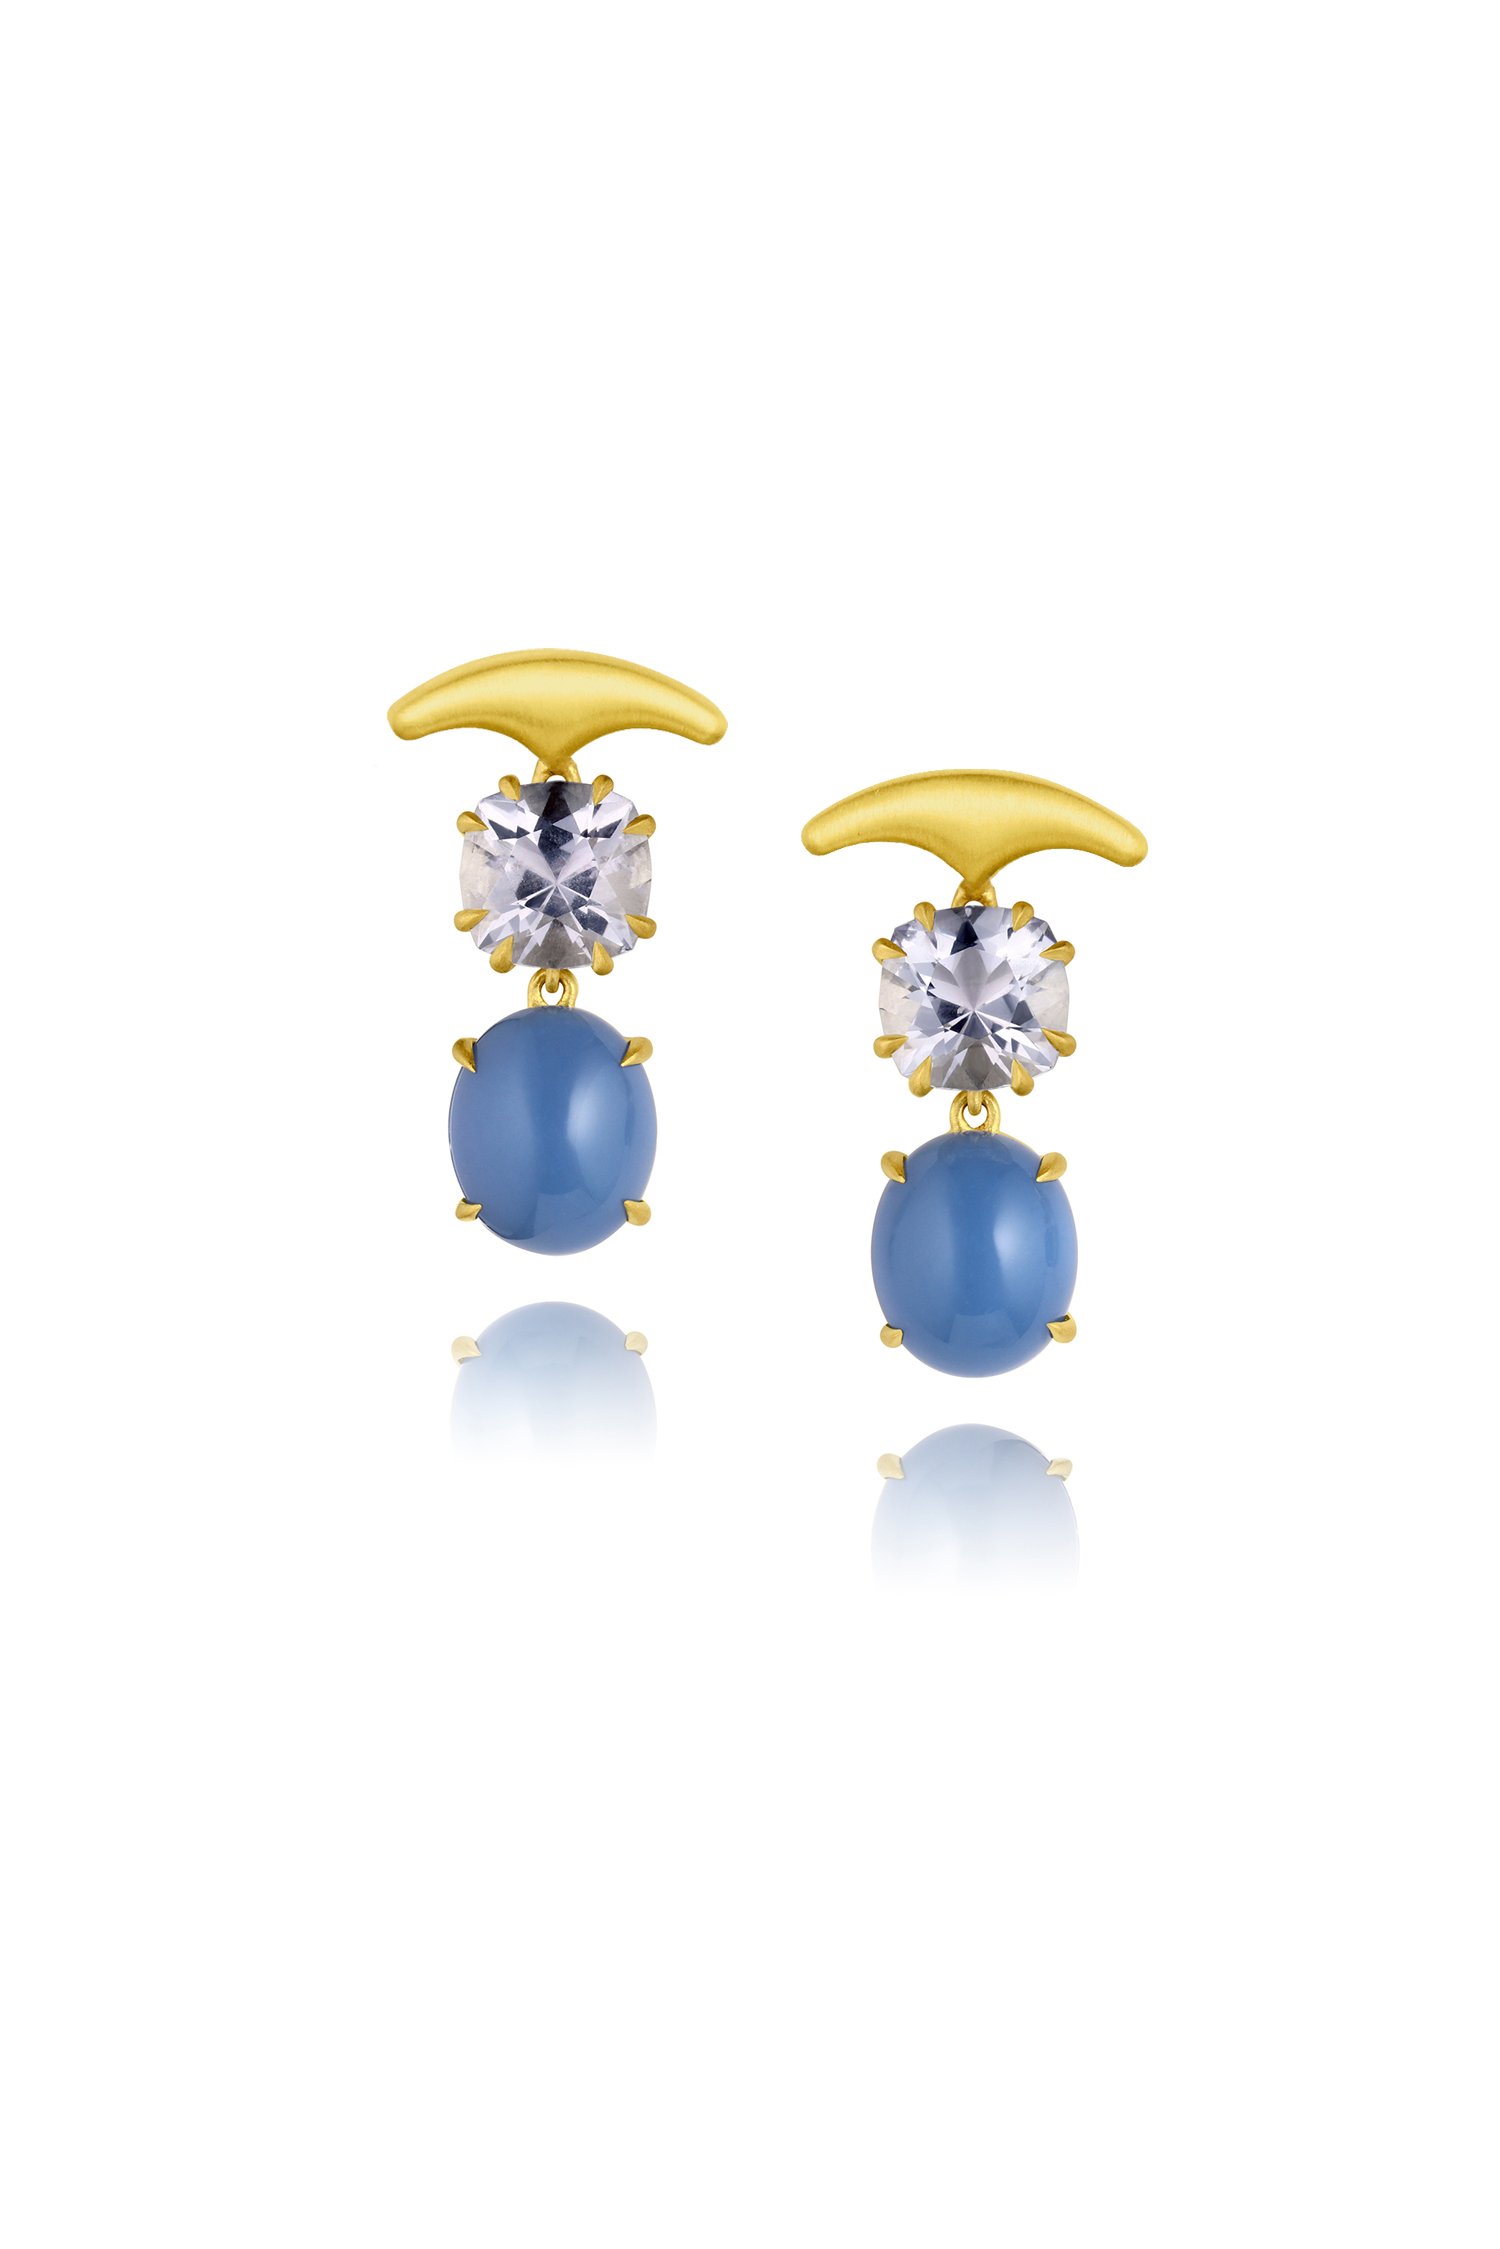 Leigh Maxwell Small Gemmy Wave Earrings - Blue Beryl/Blue Opal